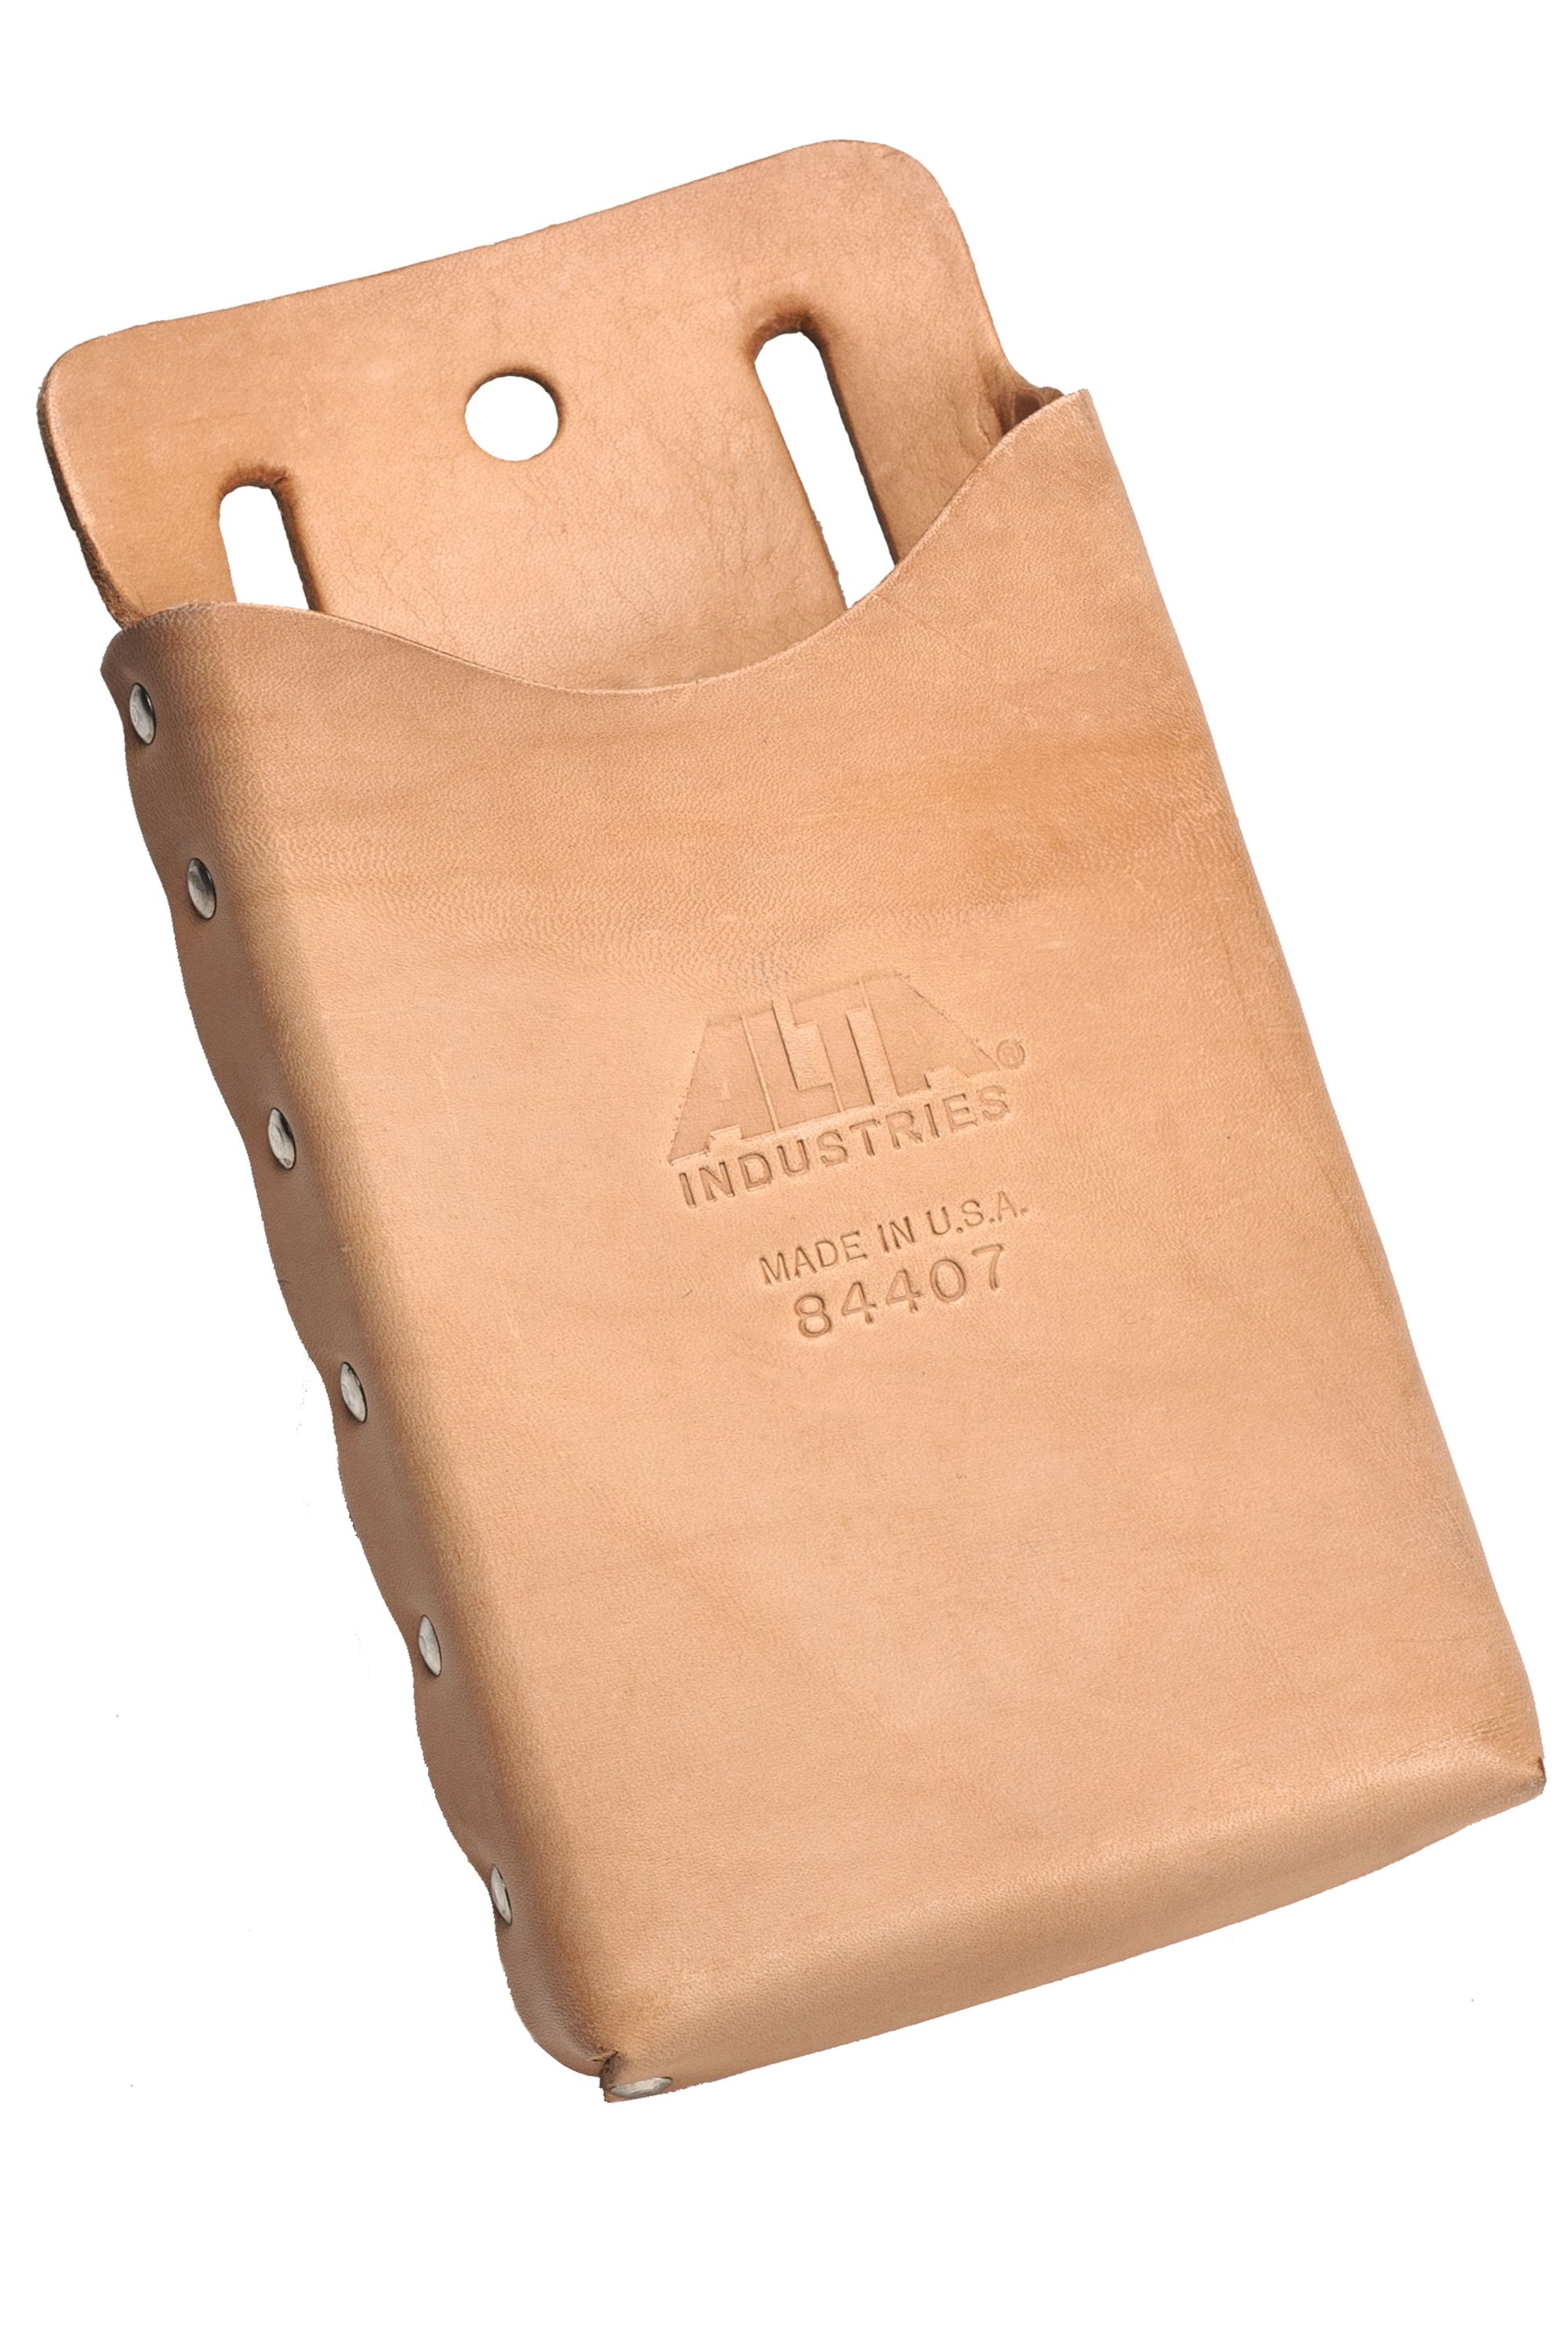 AltaGEAR Genuine Leather Box Pocket Tool Holder